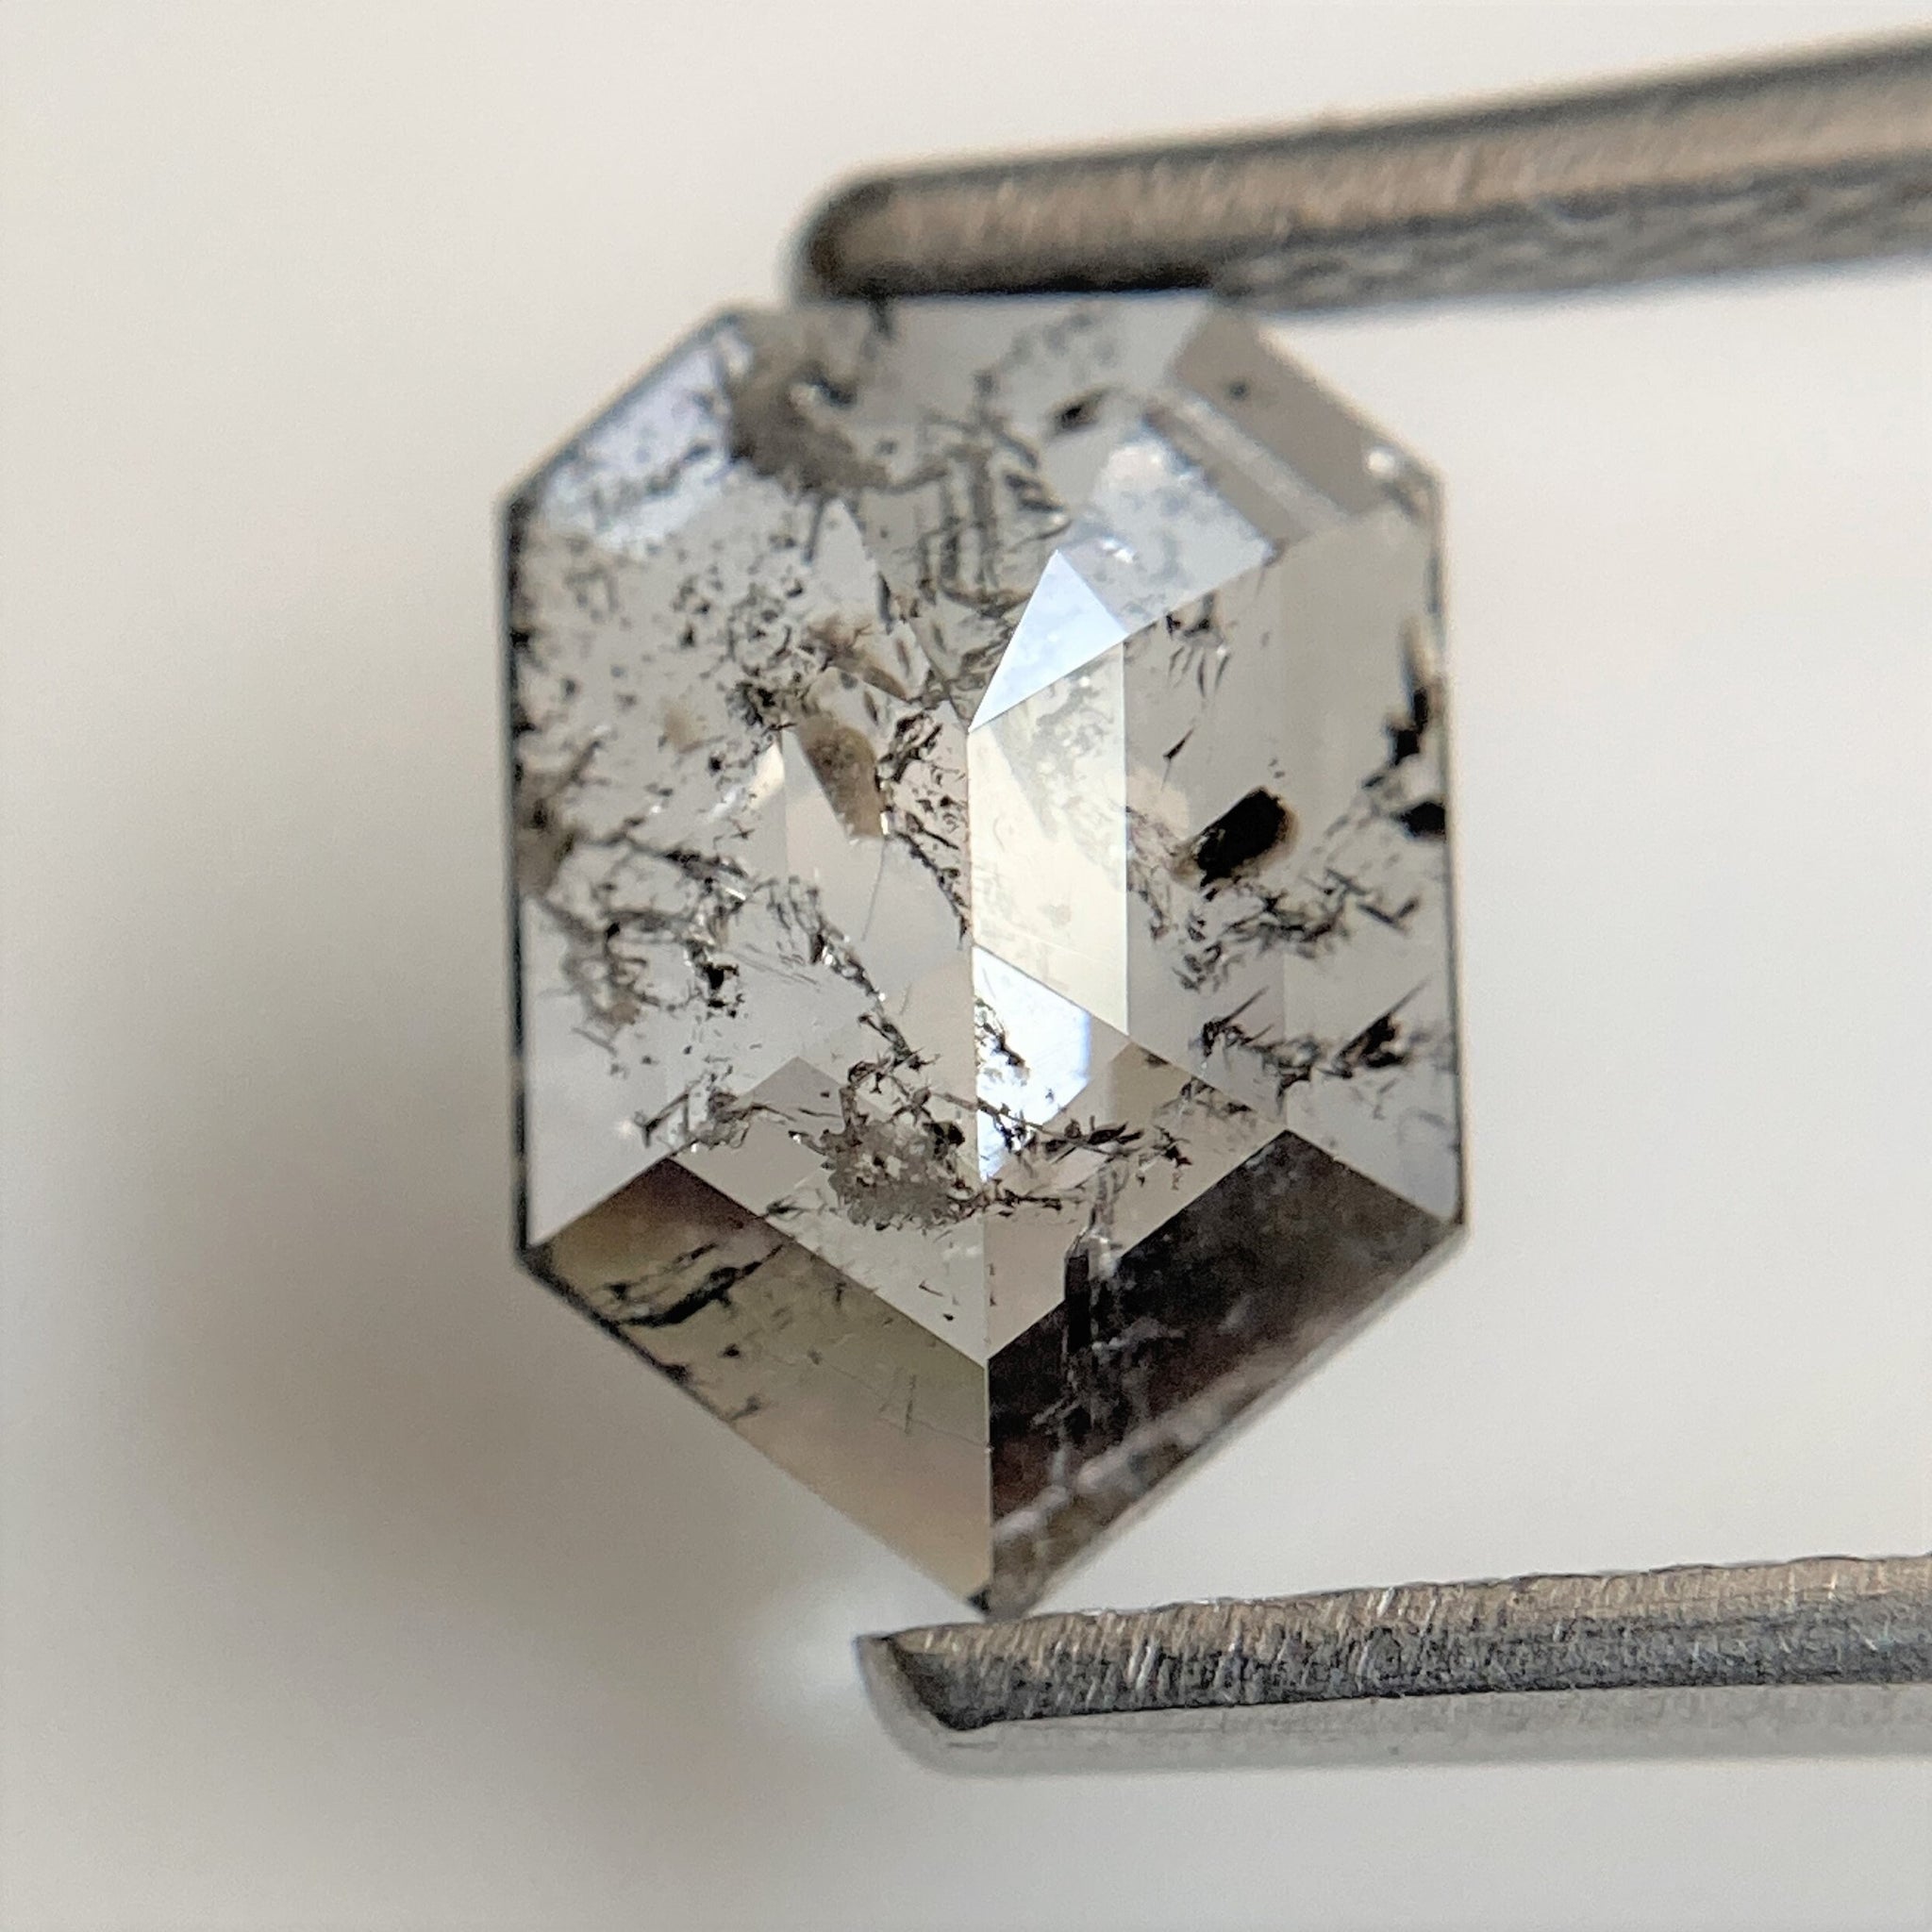 0.95 CT Grey Color Geometric shape Loose Diamond 8.22 mm x 5.90 mm x 2.40 mm Pentagon Cut Diamond Use for Jewelry SJ94/19